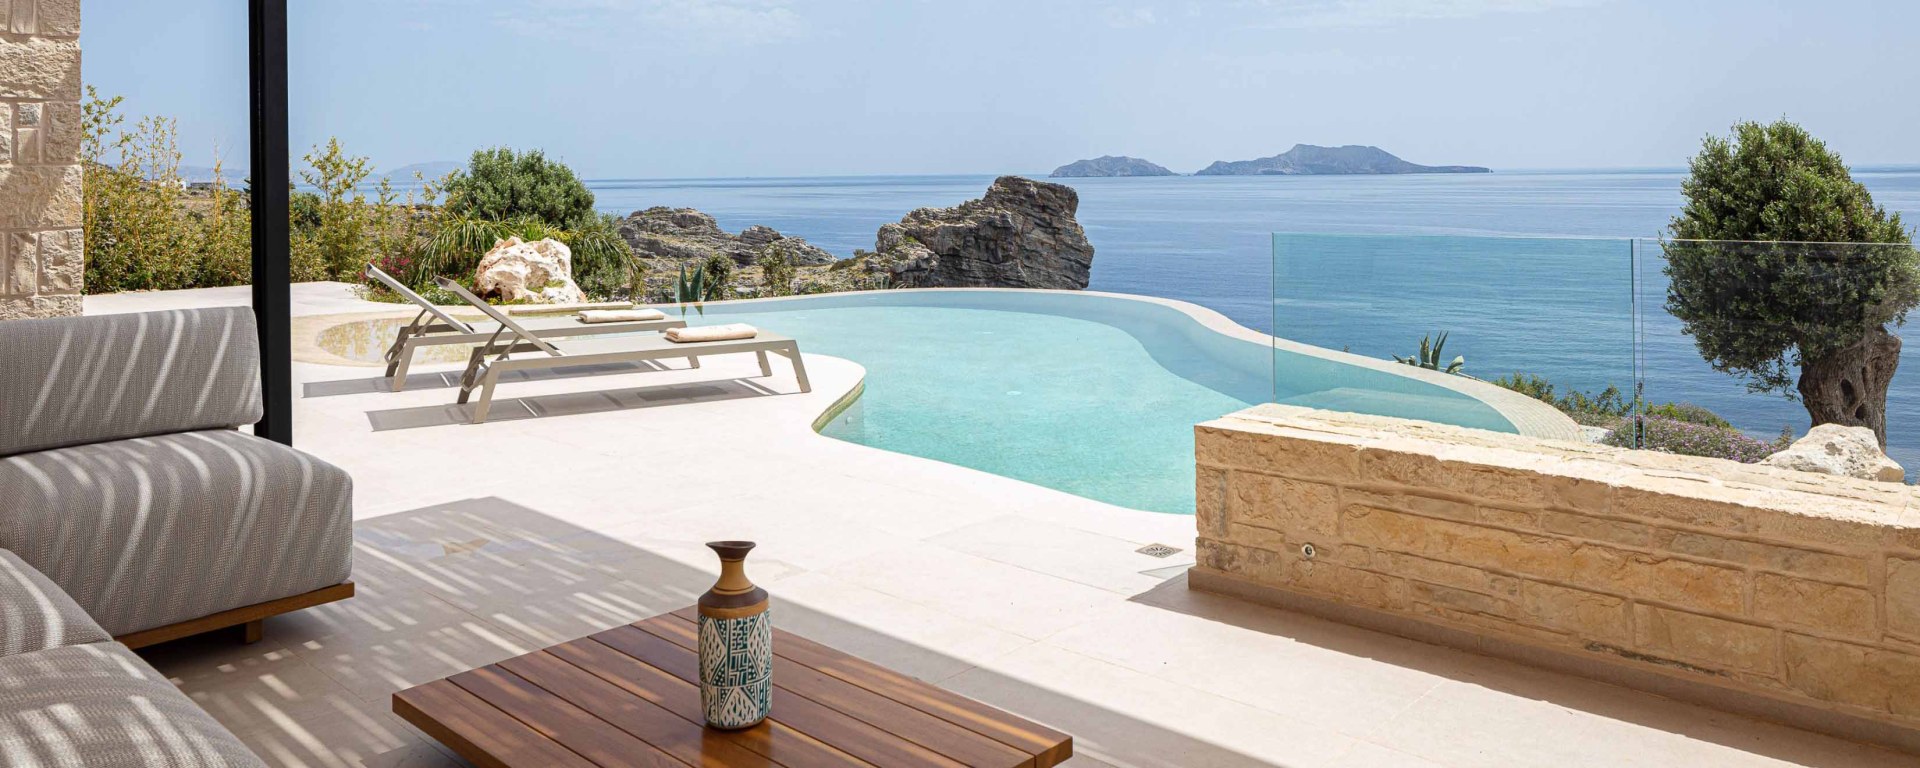 Luxus Ferienhaus Kreta 4 Personen